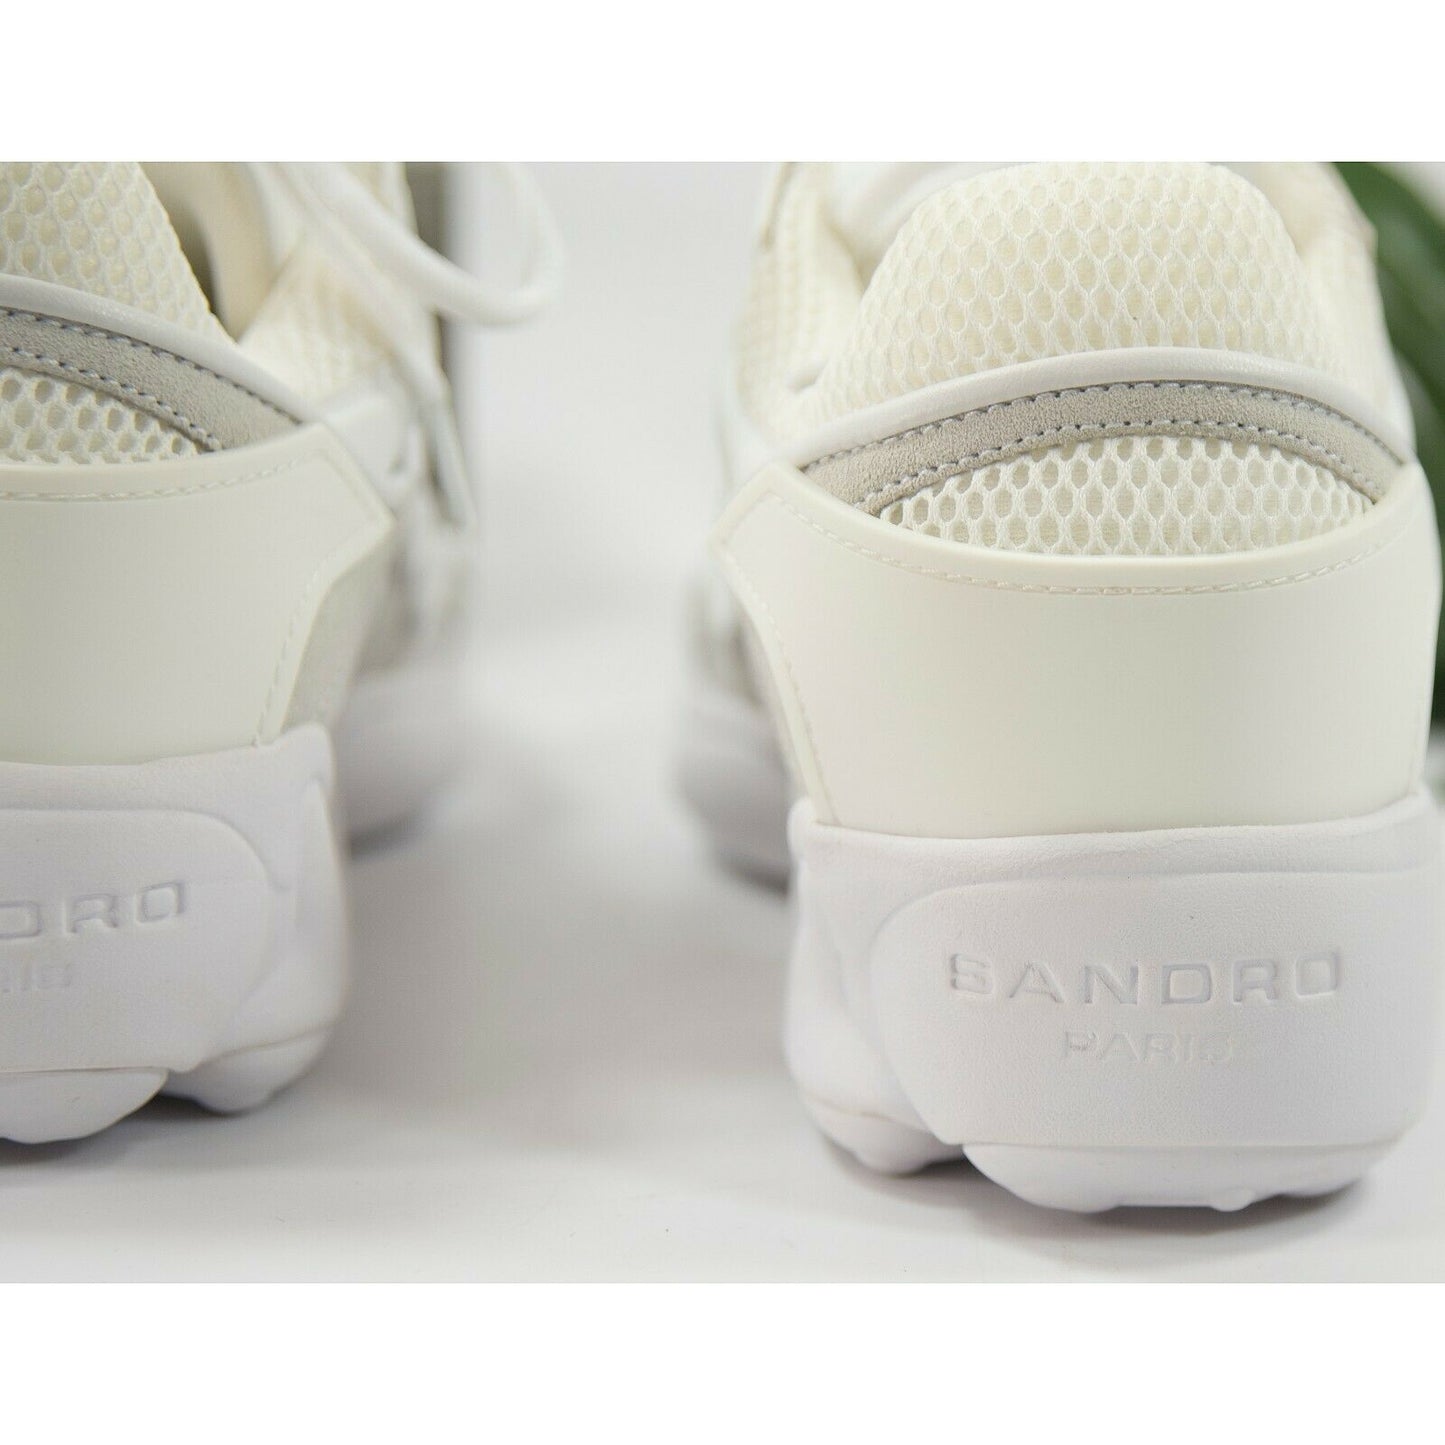 Sandro Atomic Monochrome White Leather Fabric Sneaker Shoes Size 42 US 9